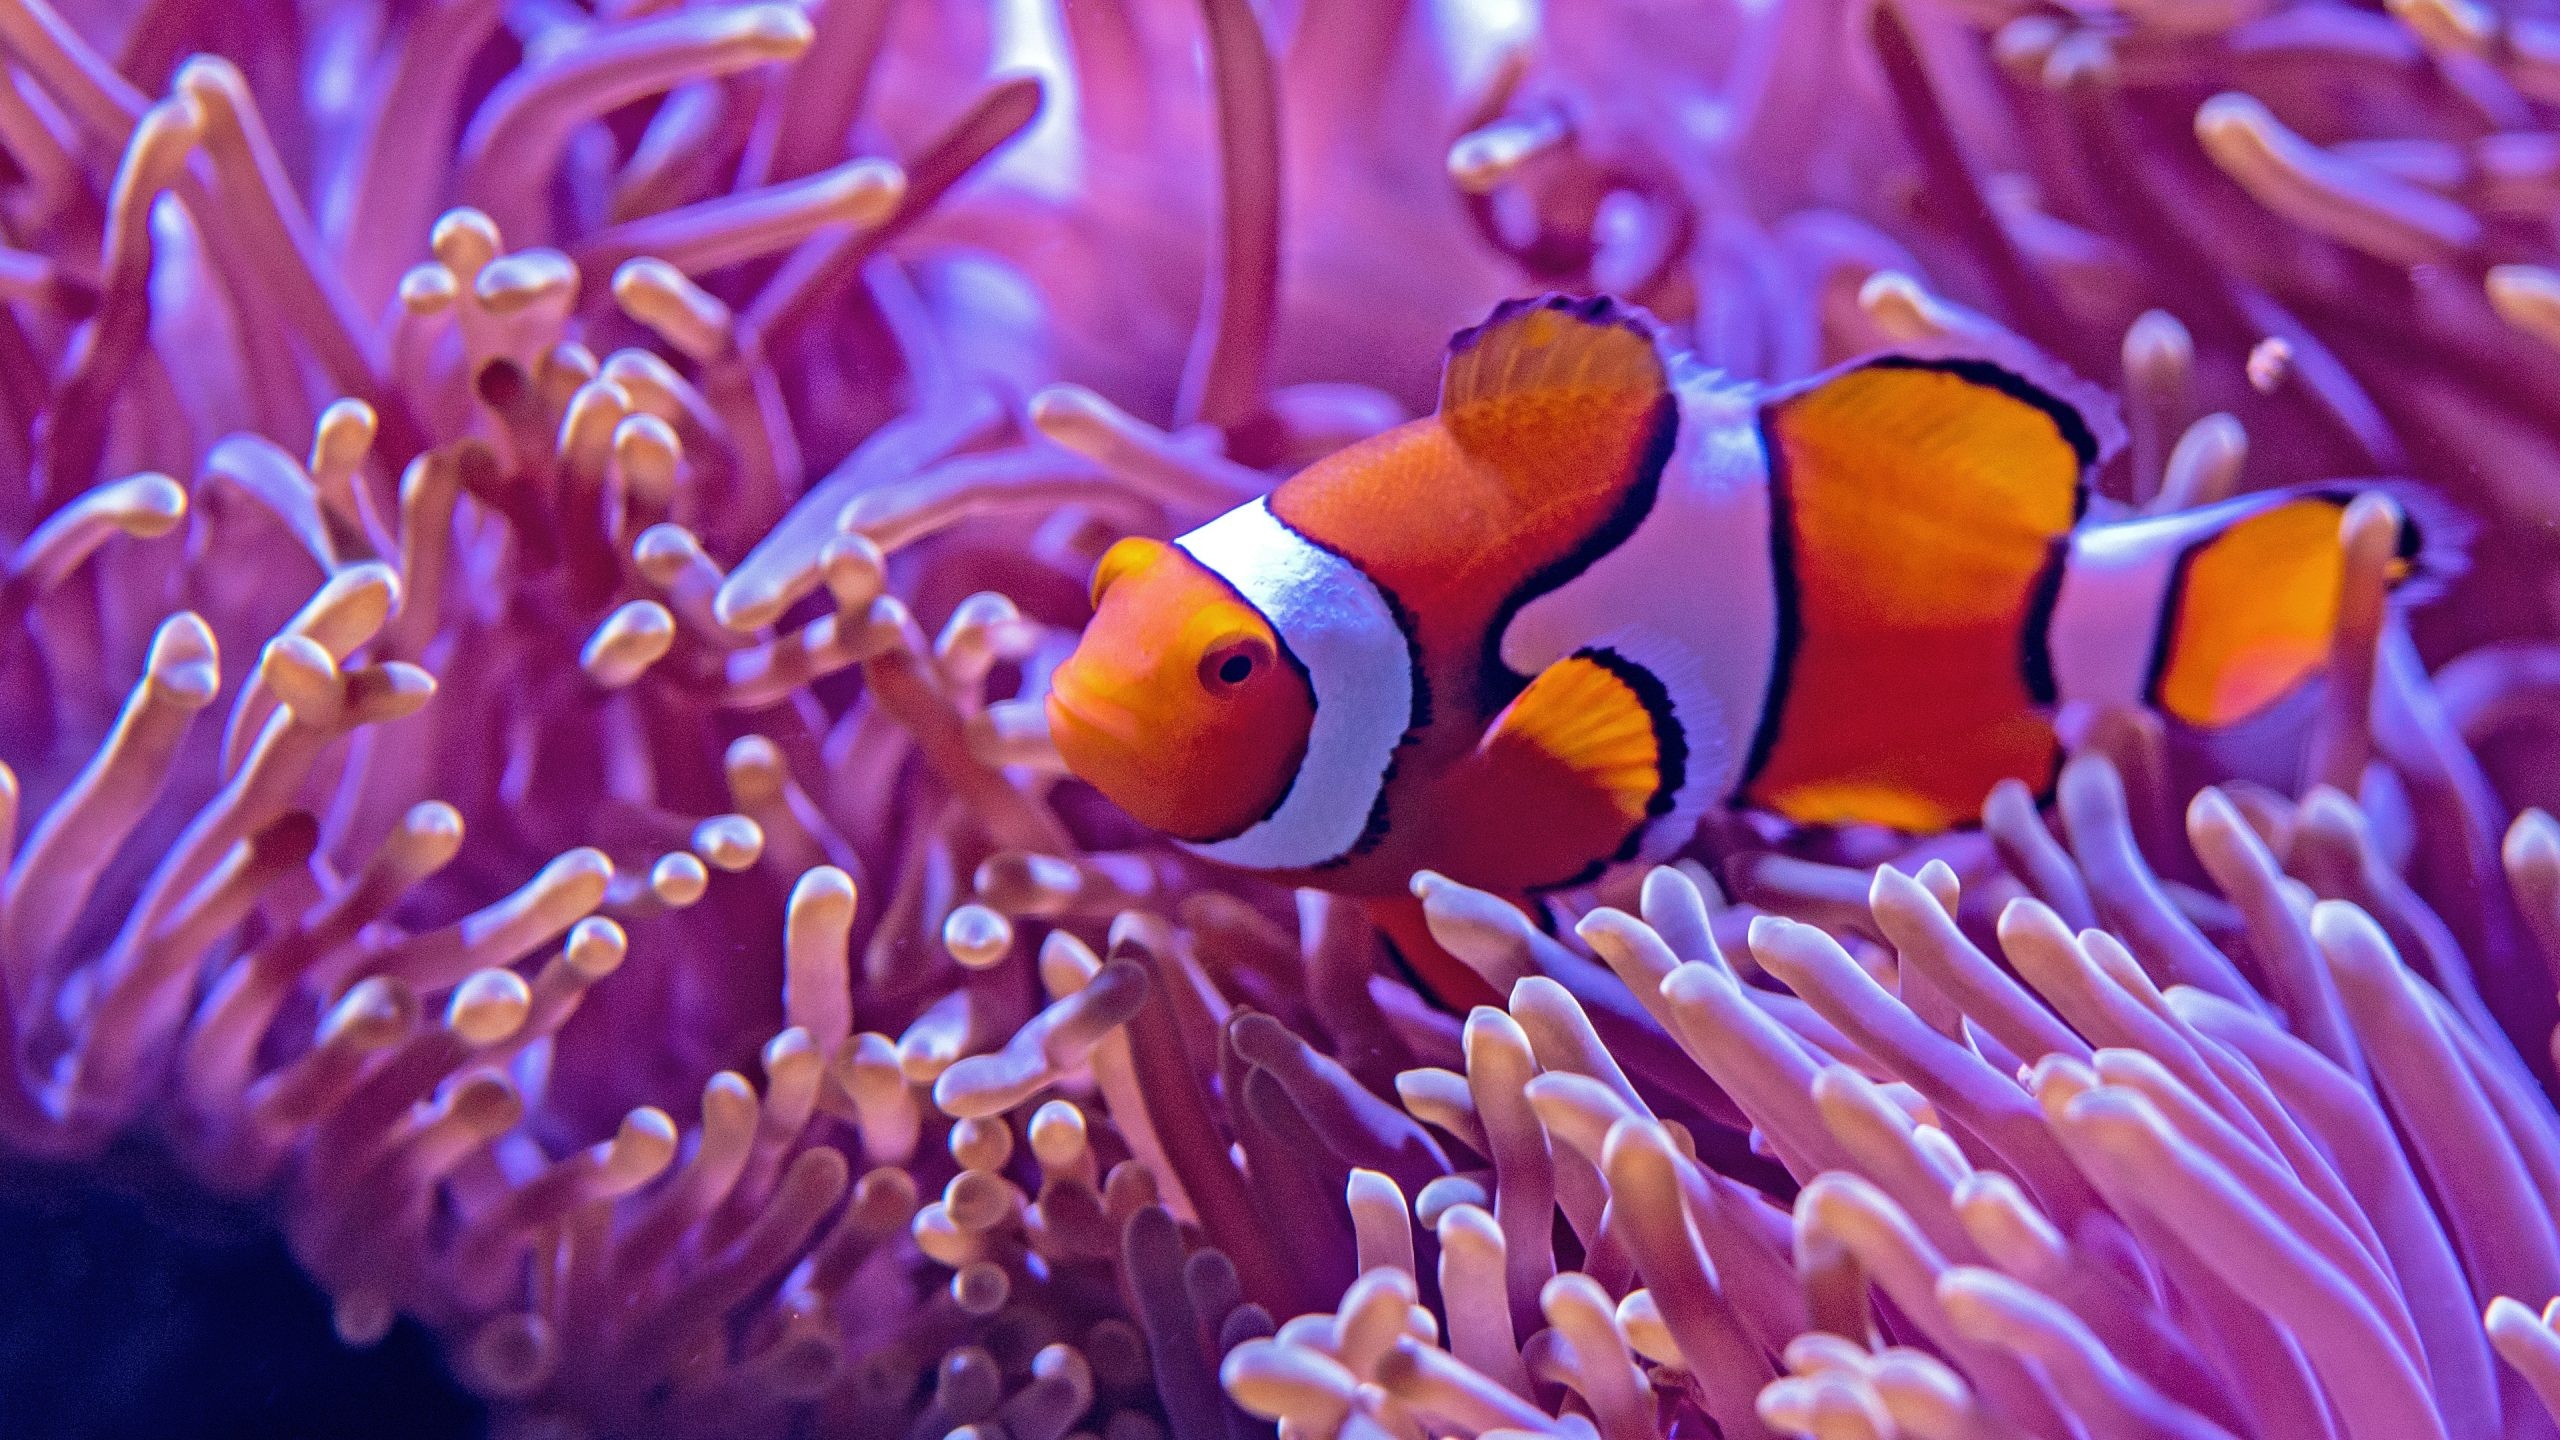 Nature's masterpiece, High-resolution wallpapers, Clown anemone fish, Stunning 4K images, 2560x1440 HD Desktop